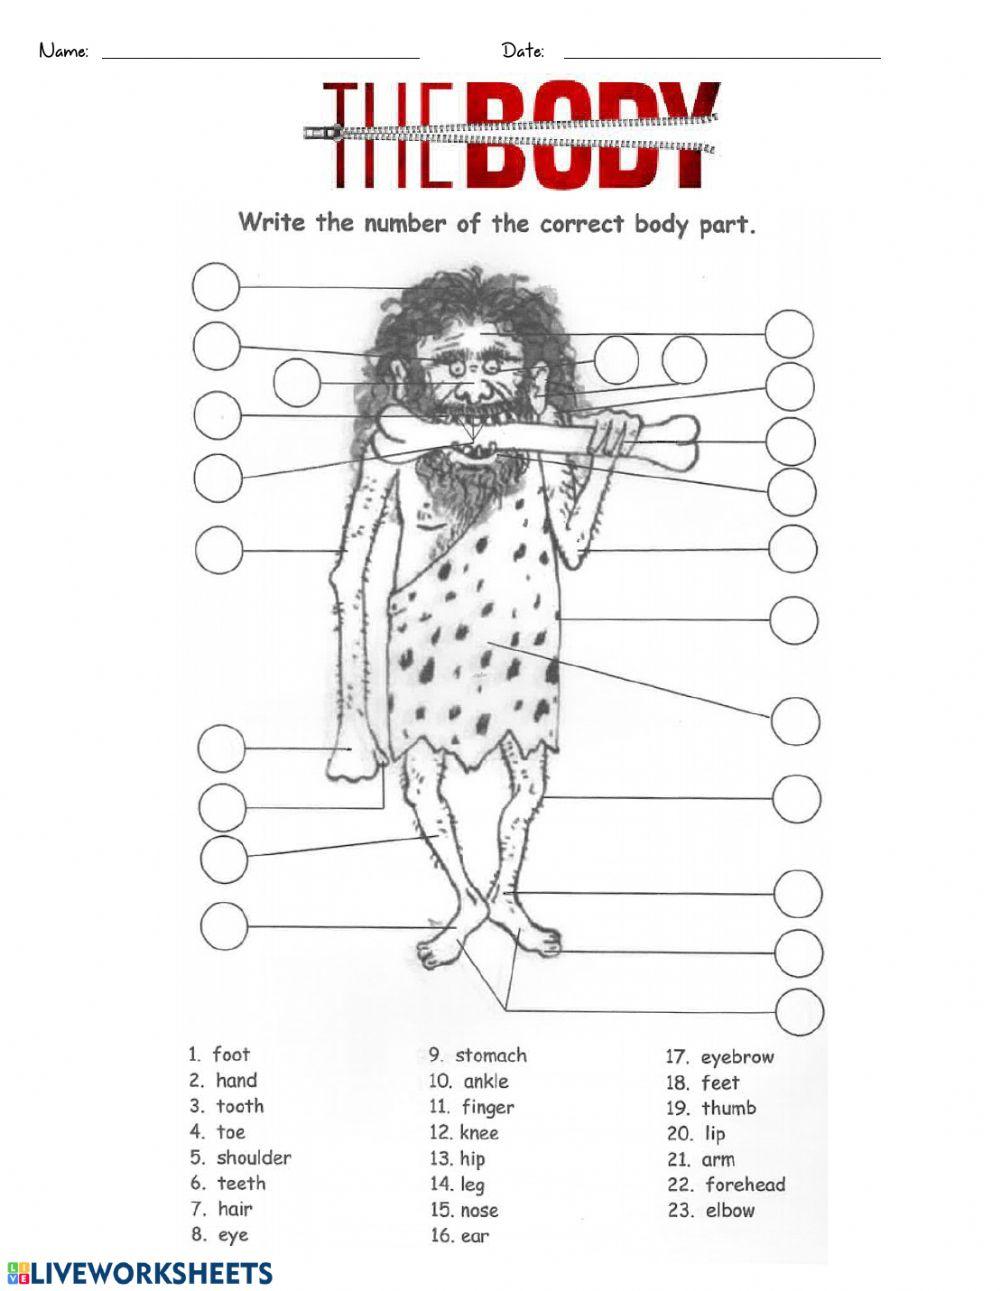 The caveman's body